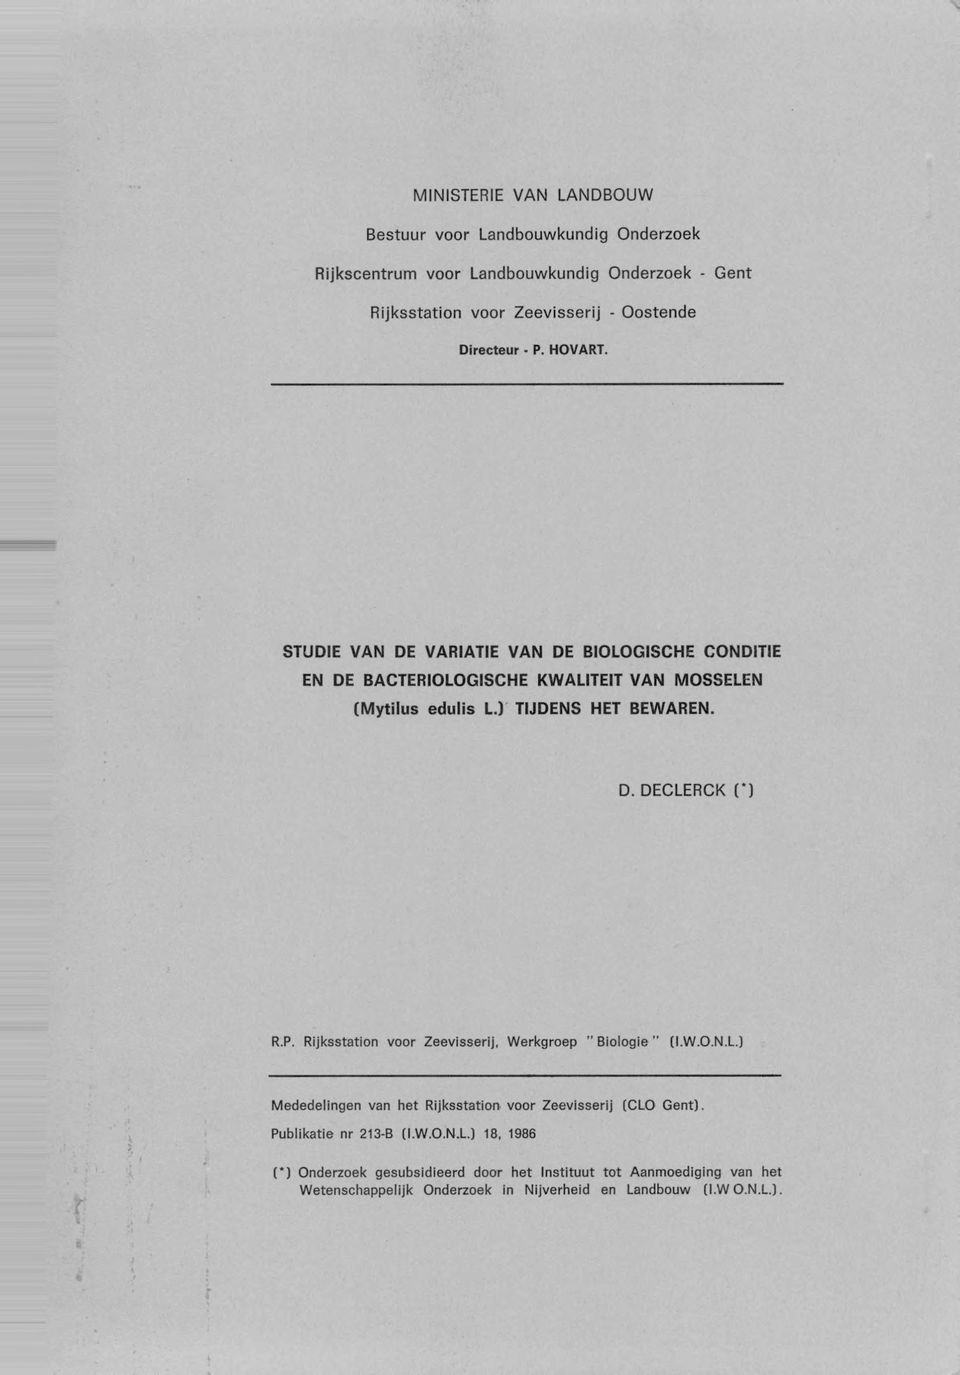 w.o.n.l.) M ededelingen van het Rijksstation voo r Z eevisserij (CLO G en t). Publikatie nr 213-B U.W.O.N.L.) 18.